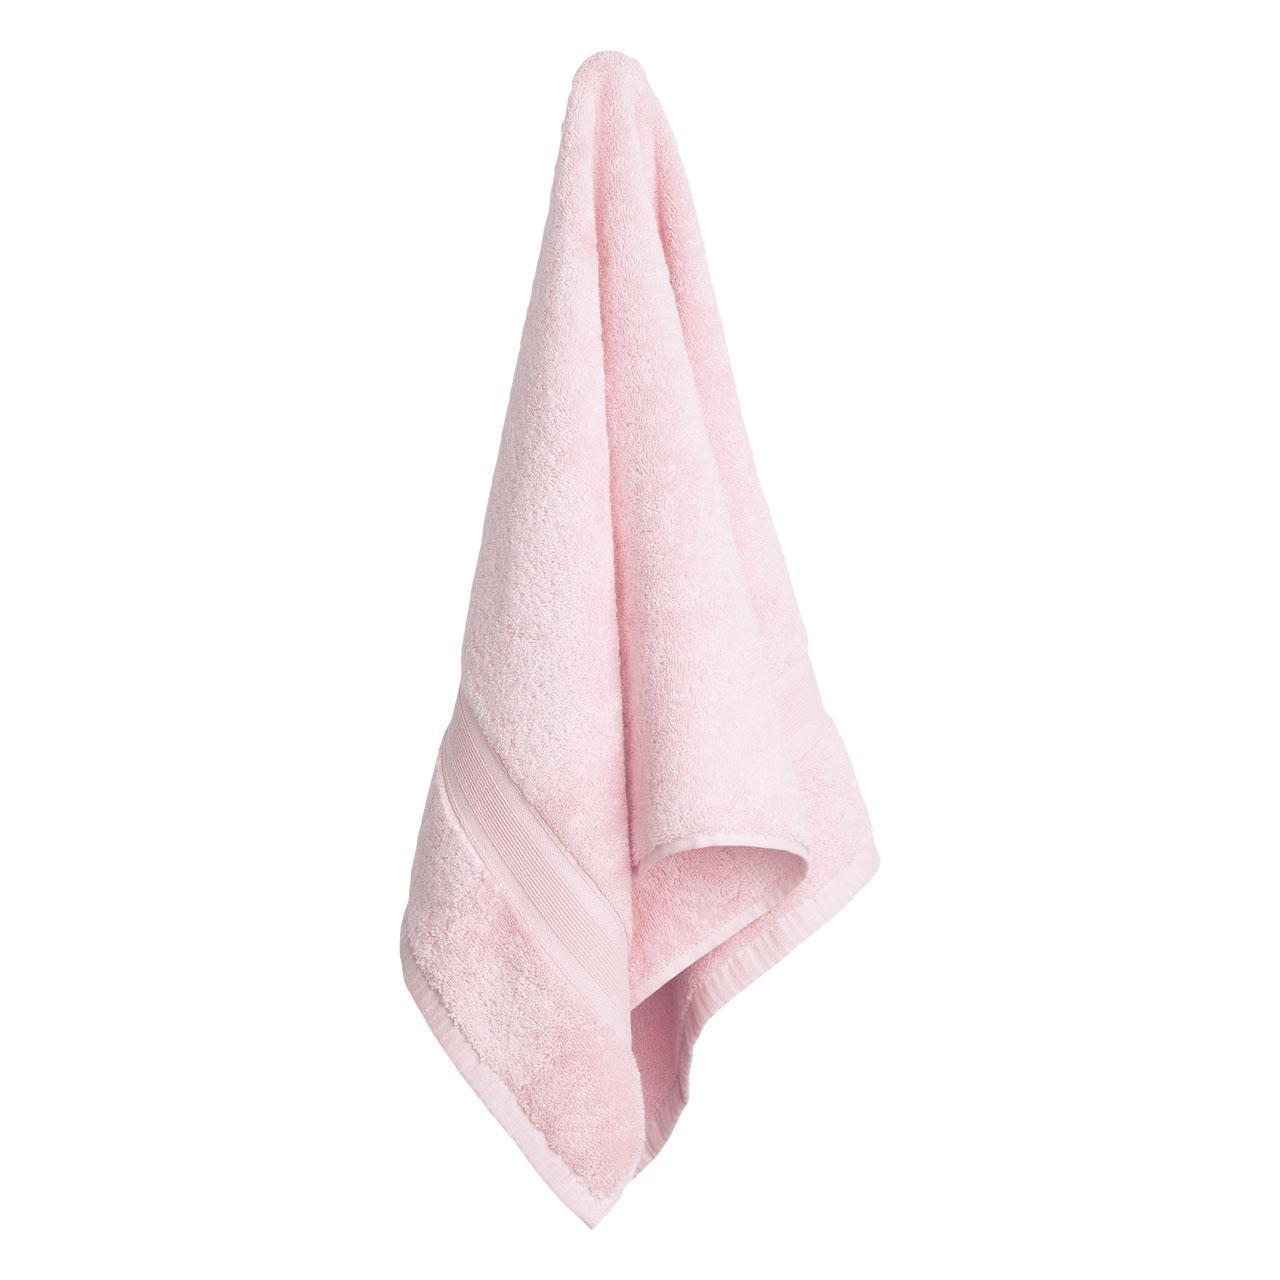 M&S Super Soft Antibacterial Cotton, Bath Towel, Light Pink